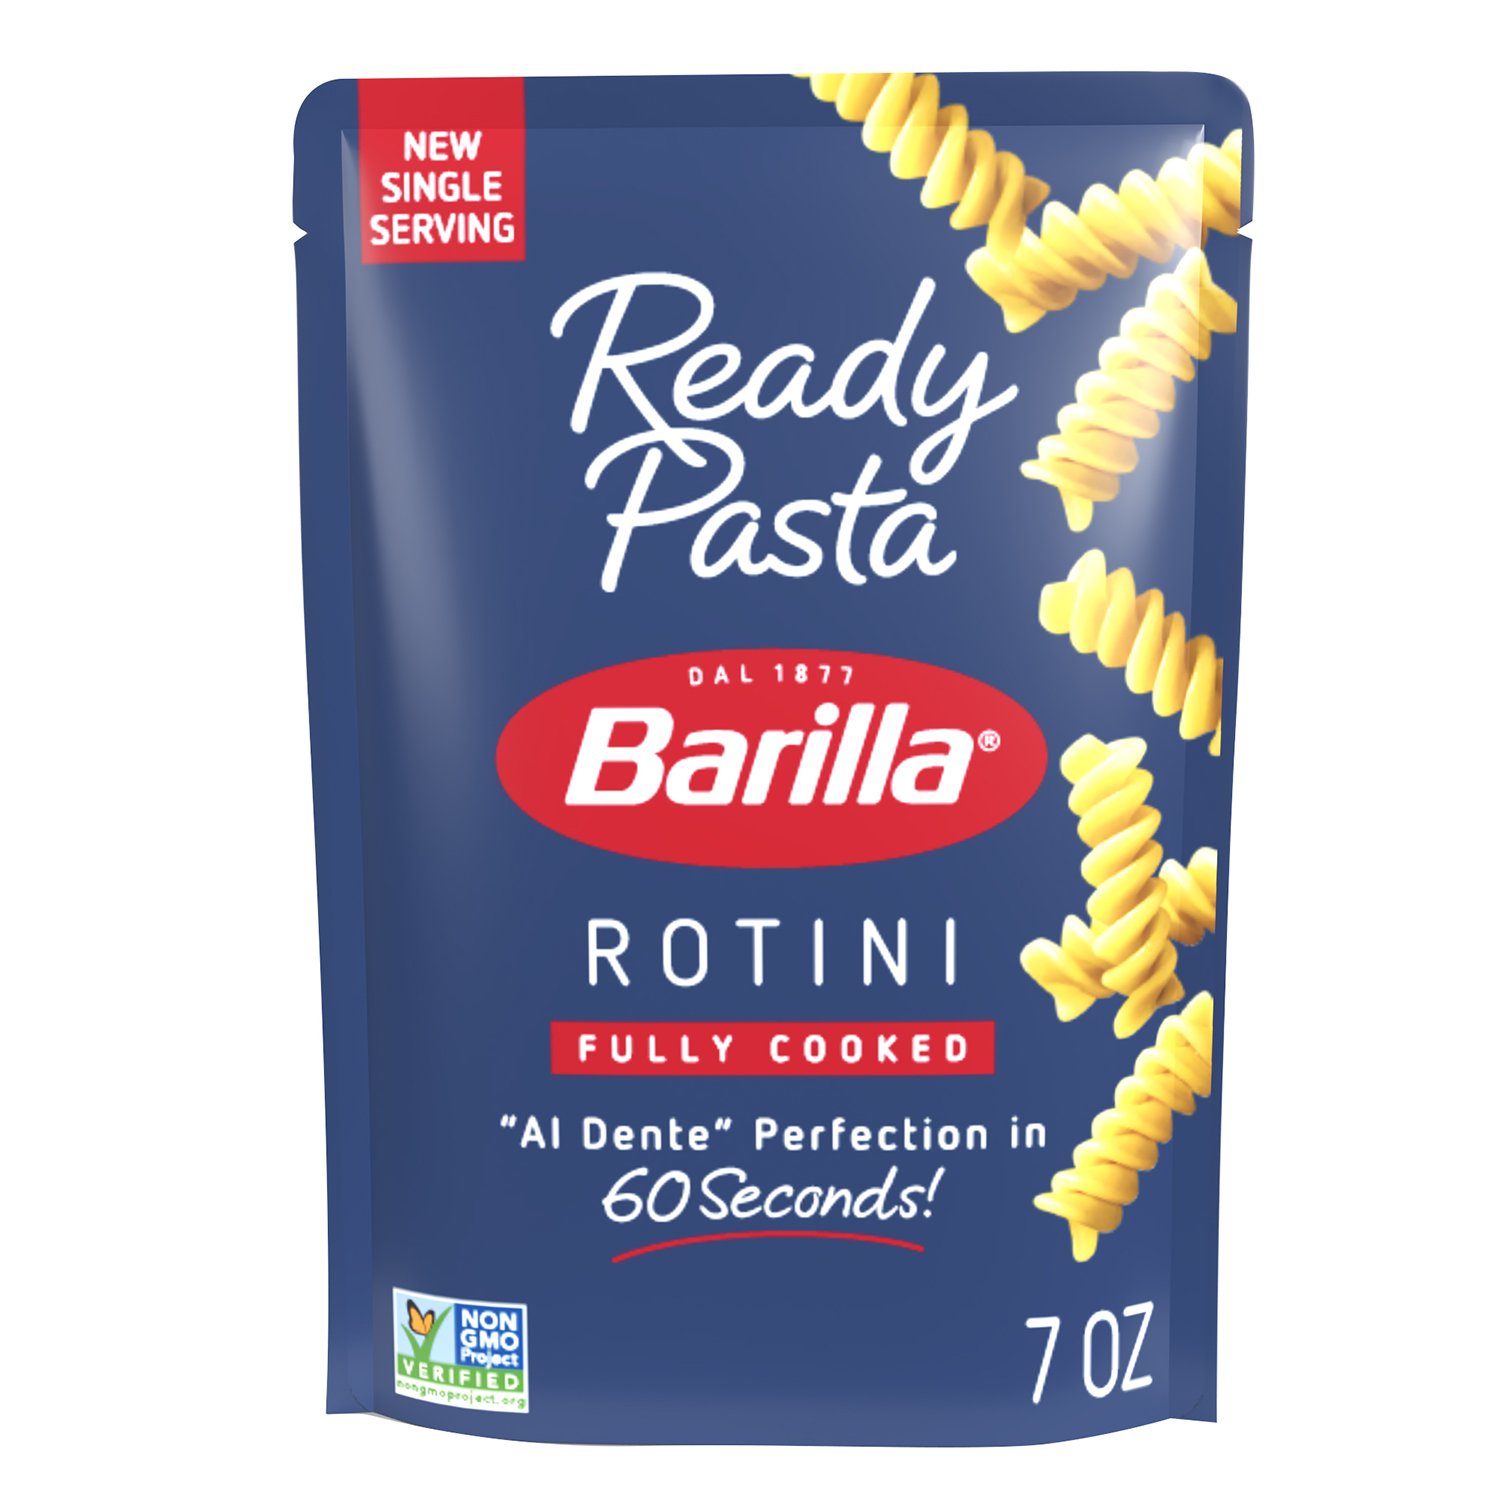 Barilla Ready Shop Pasta Rotini Pasta - at H-E-B